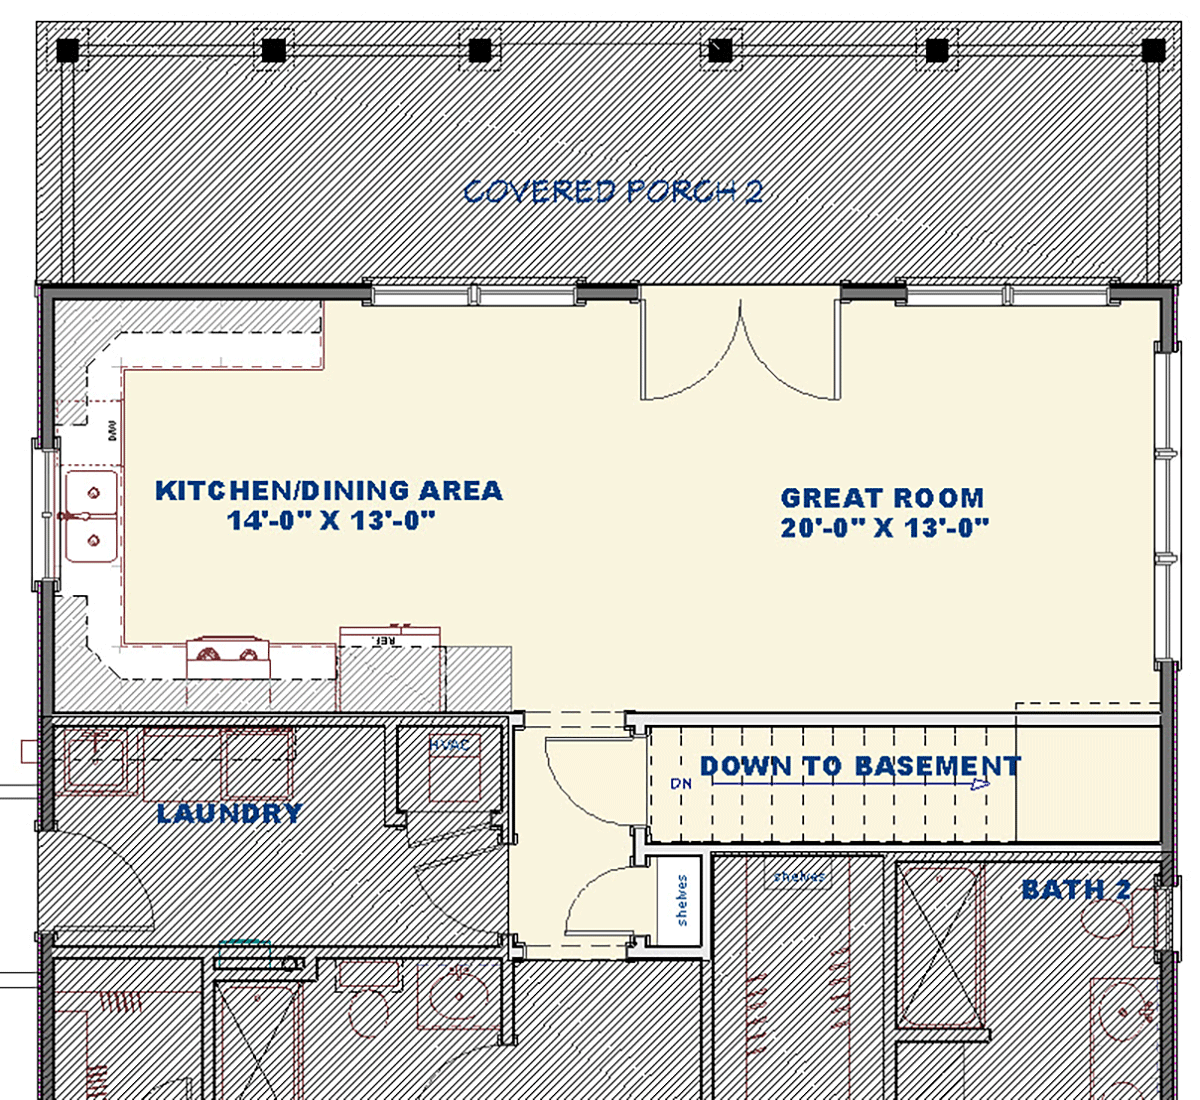 House Plan 64564 Alternate Level One